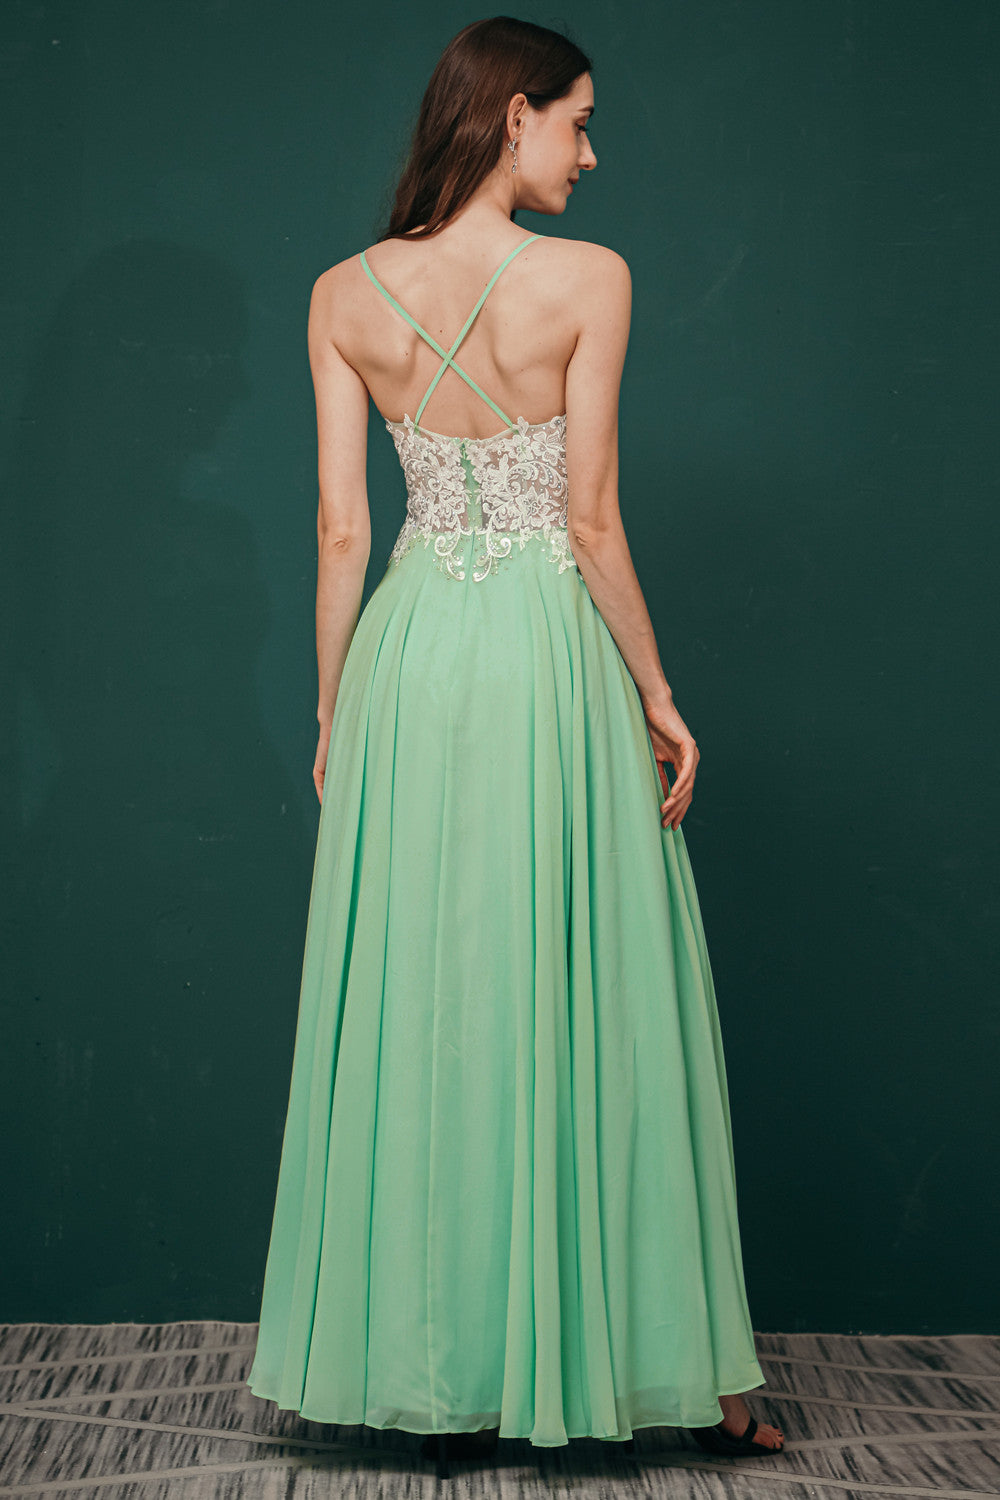 White Lace SPAGHETTI STRAPS High Split Mint green Evening Dress – Ballbella